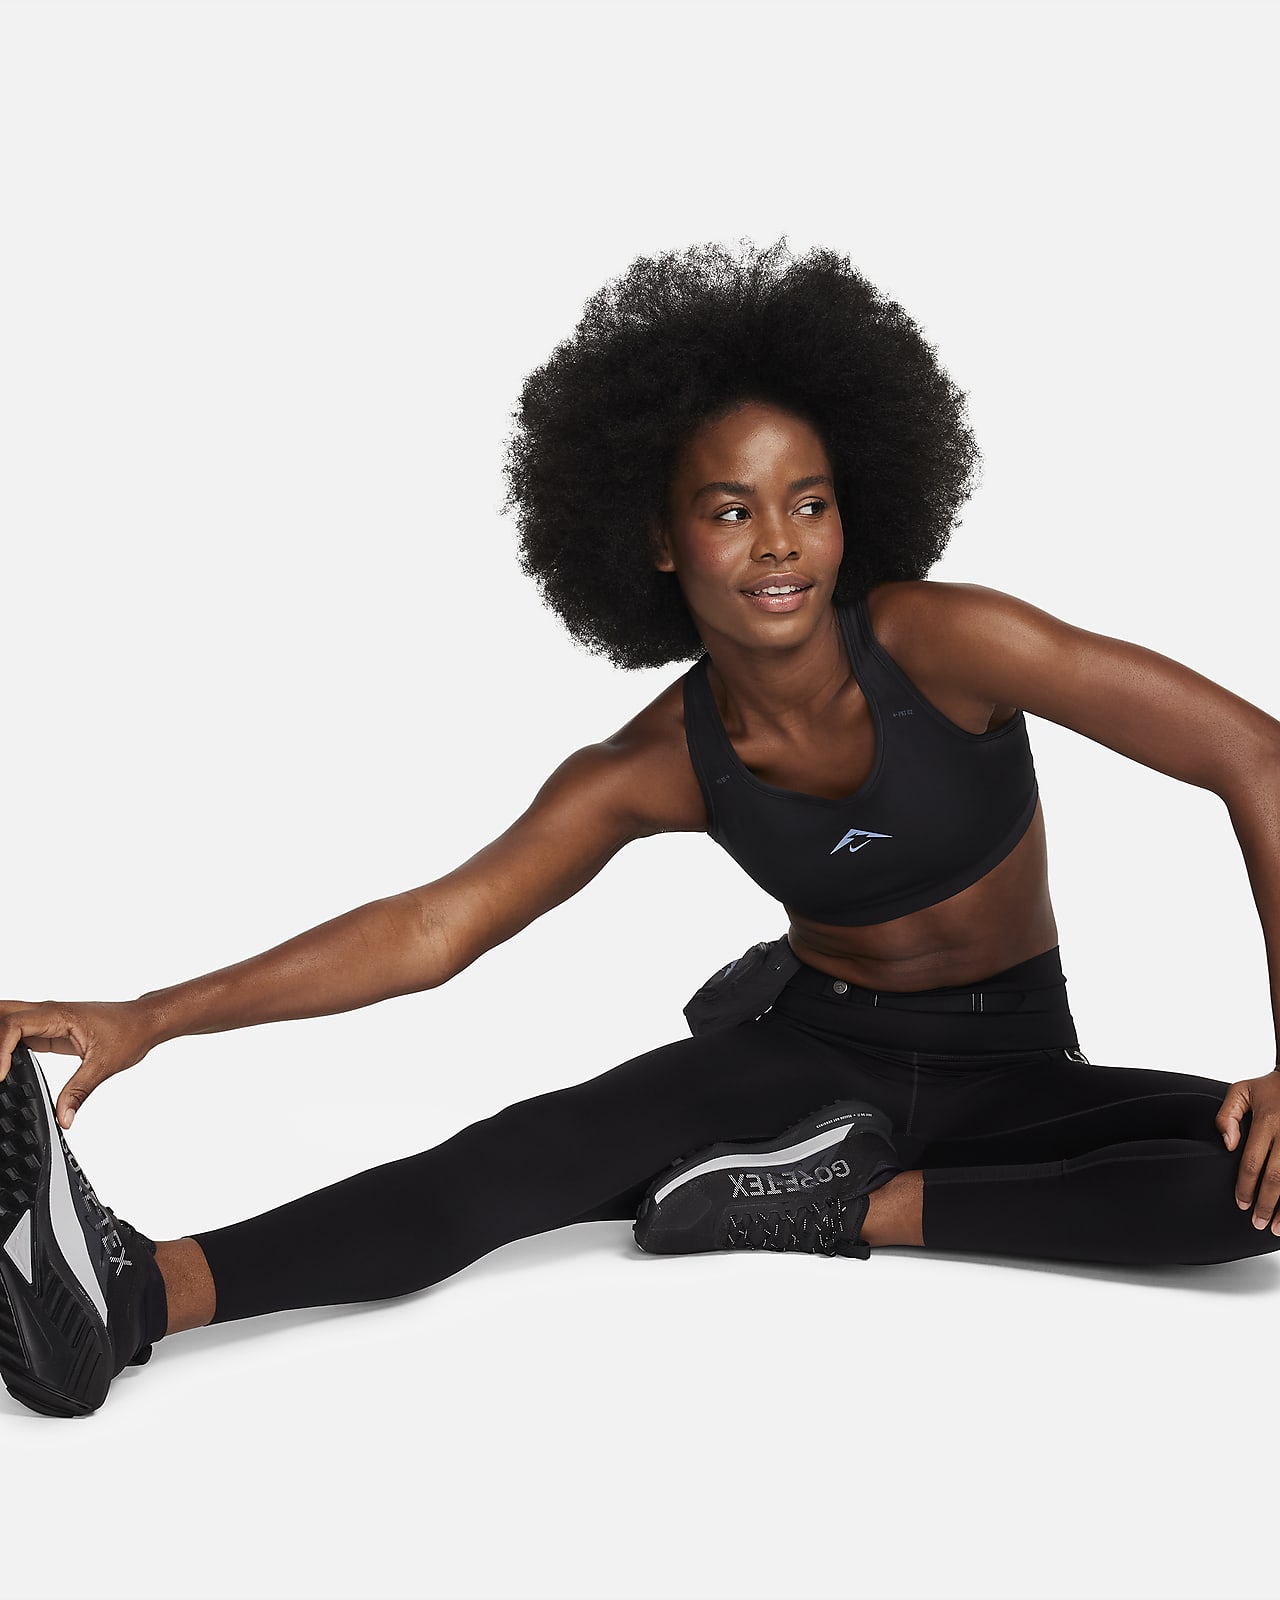 Nike Trail Swoosh On-the-Run Women's Medium-Support Lightly Lined Sports  Bra. Nike LU